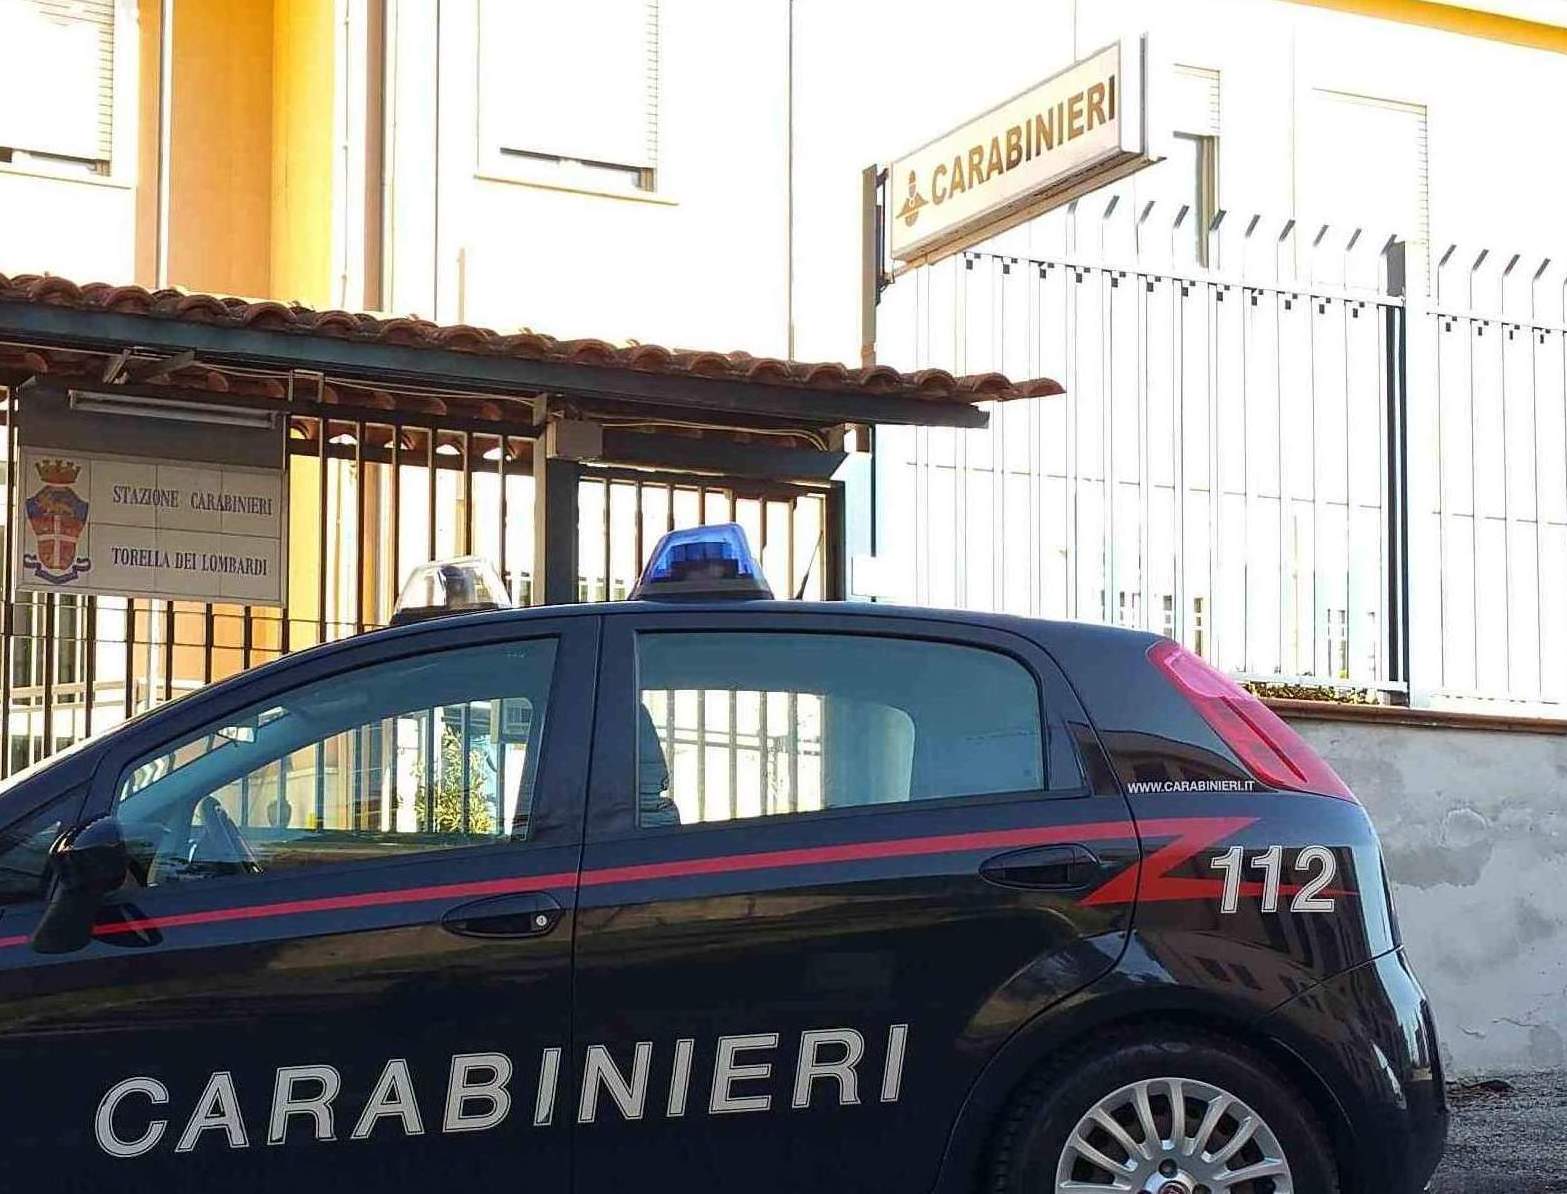 Commercianti truffati in Alta Irpinia: due donne denunciate dai carabinieri